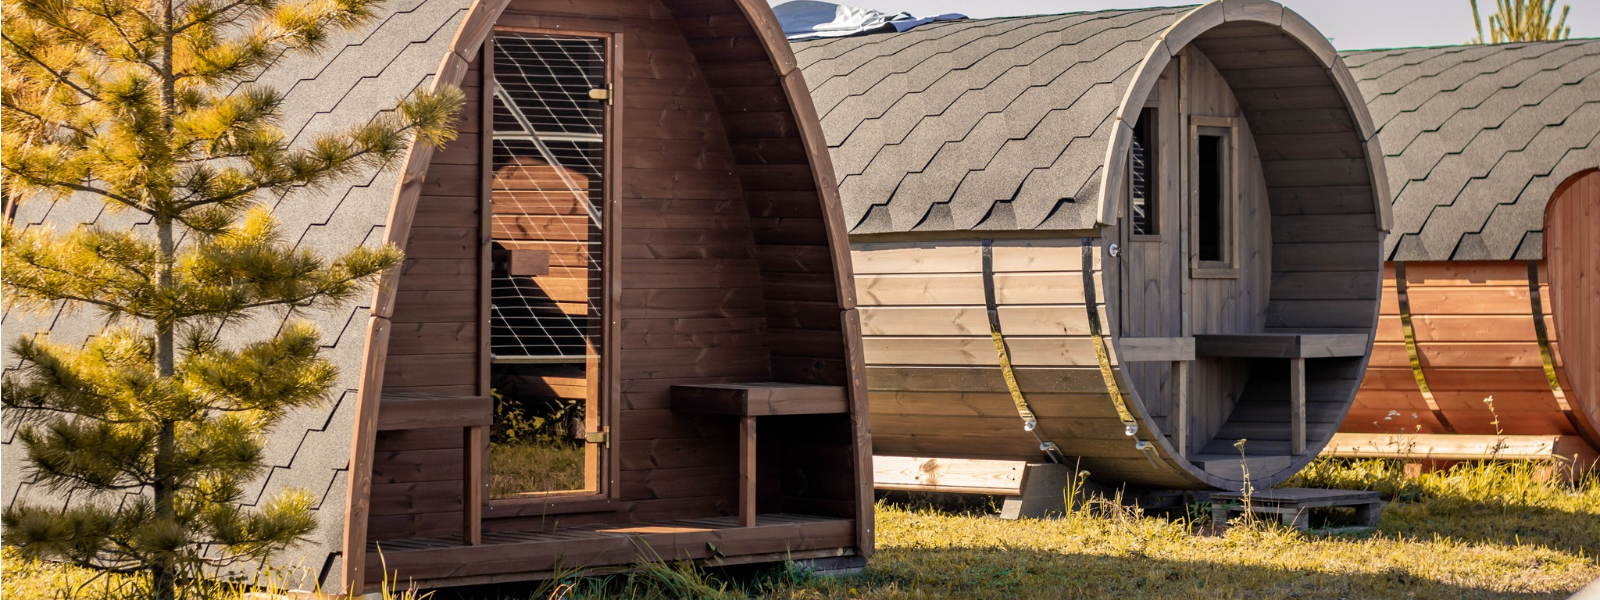 ECOSAUNA PROJECT OÜ - hot tubs with integrated oven, spa and sauna products, warehouse sale saunas, Estonian sauna manufa...